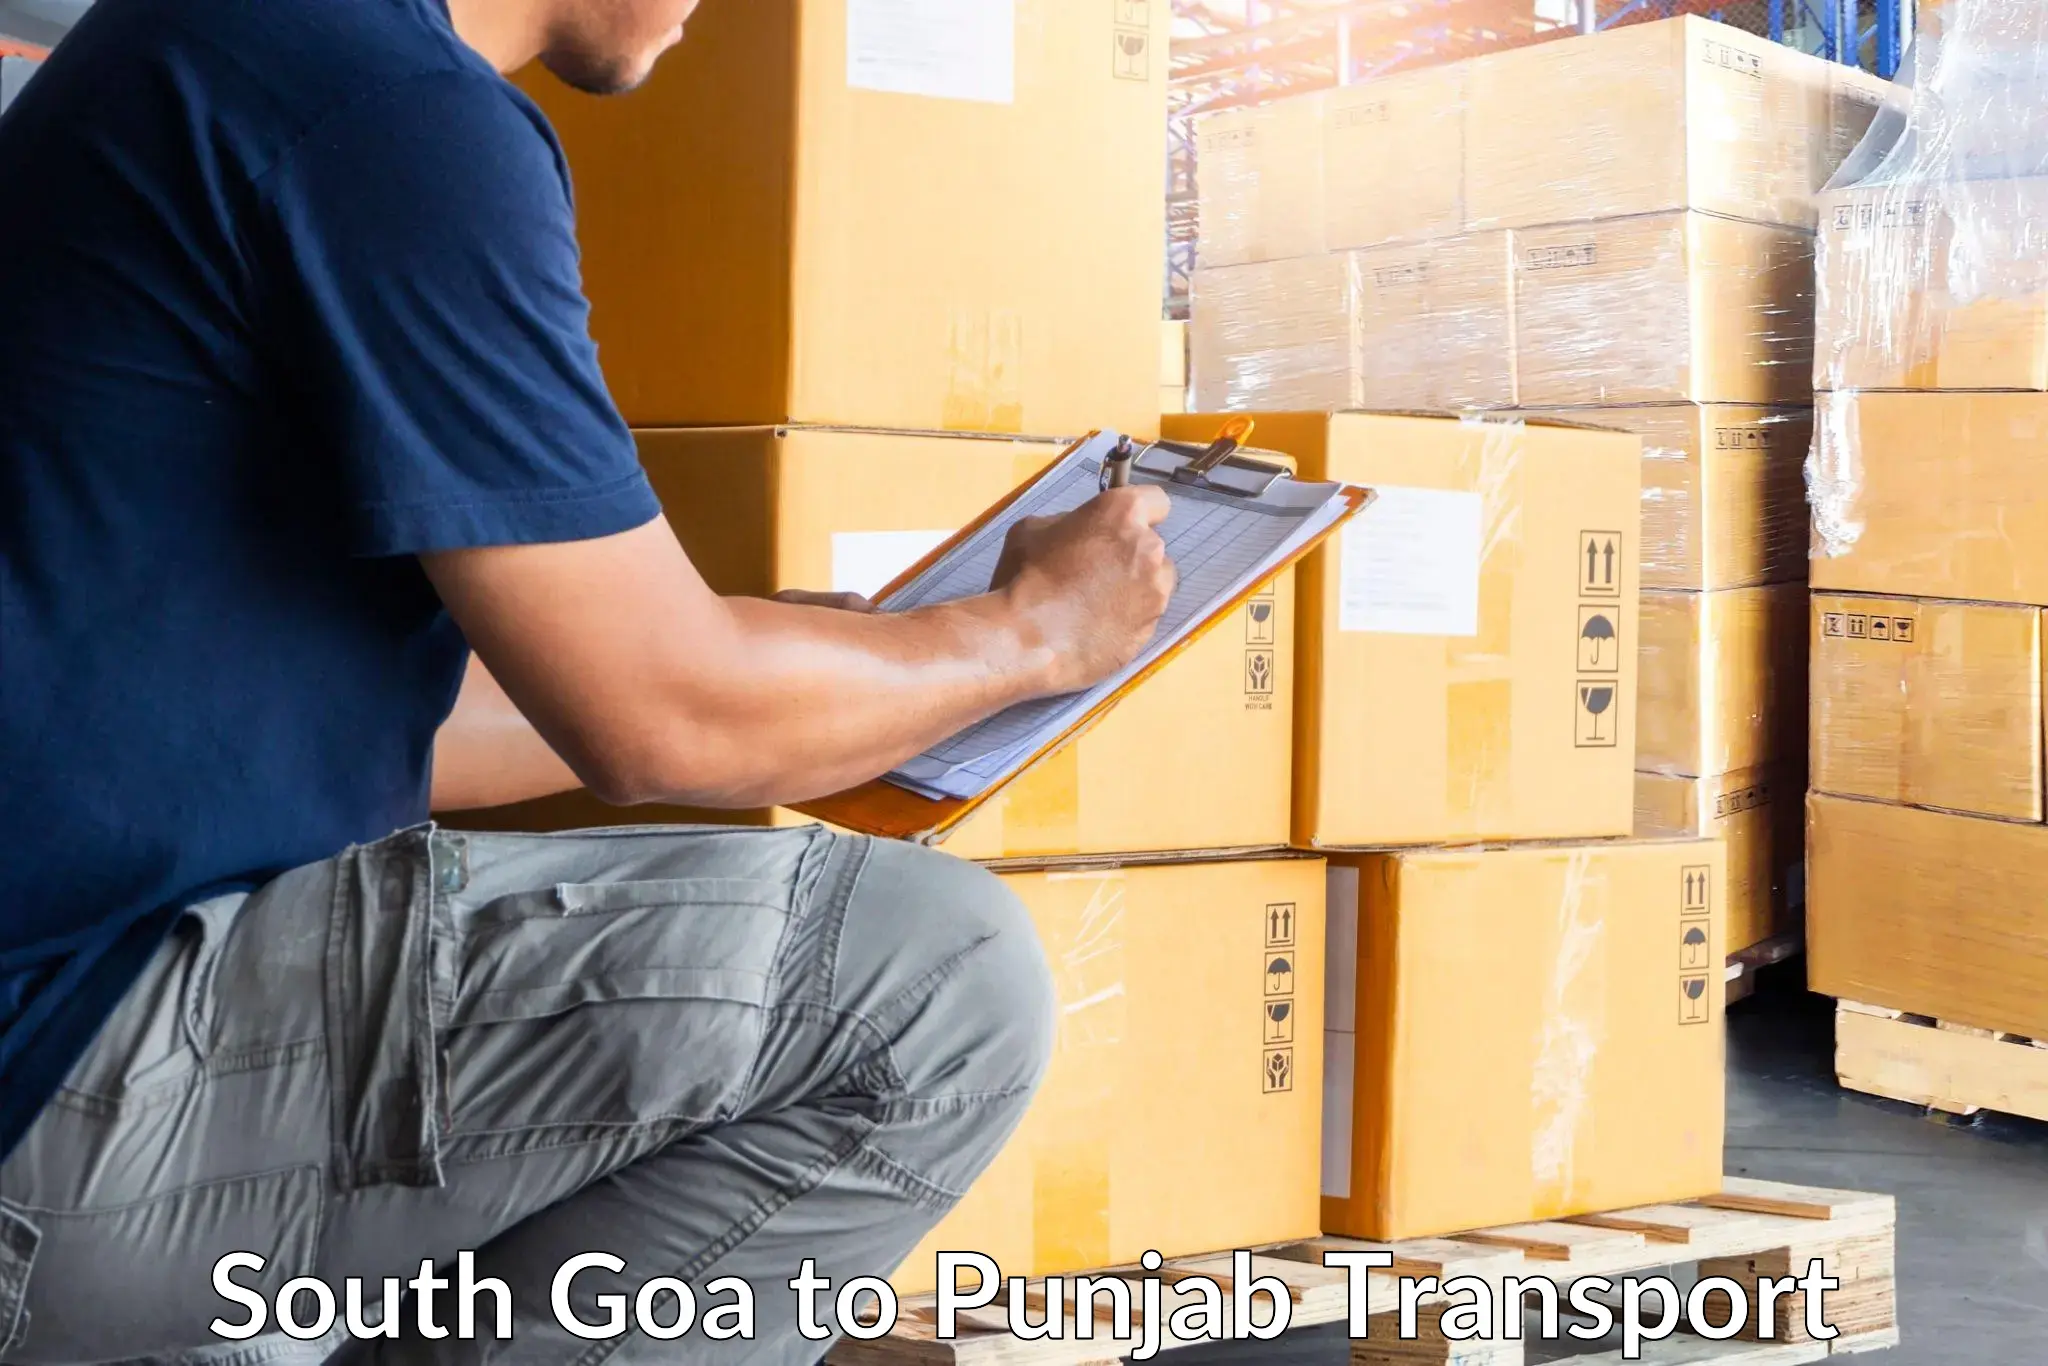 Daily parcel service transport South Goa to Dinanagar